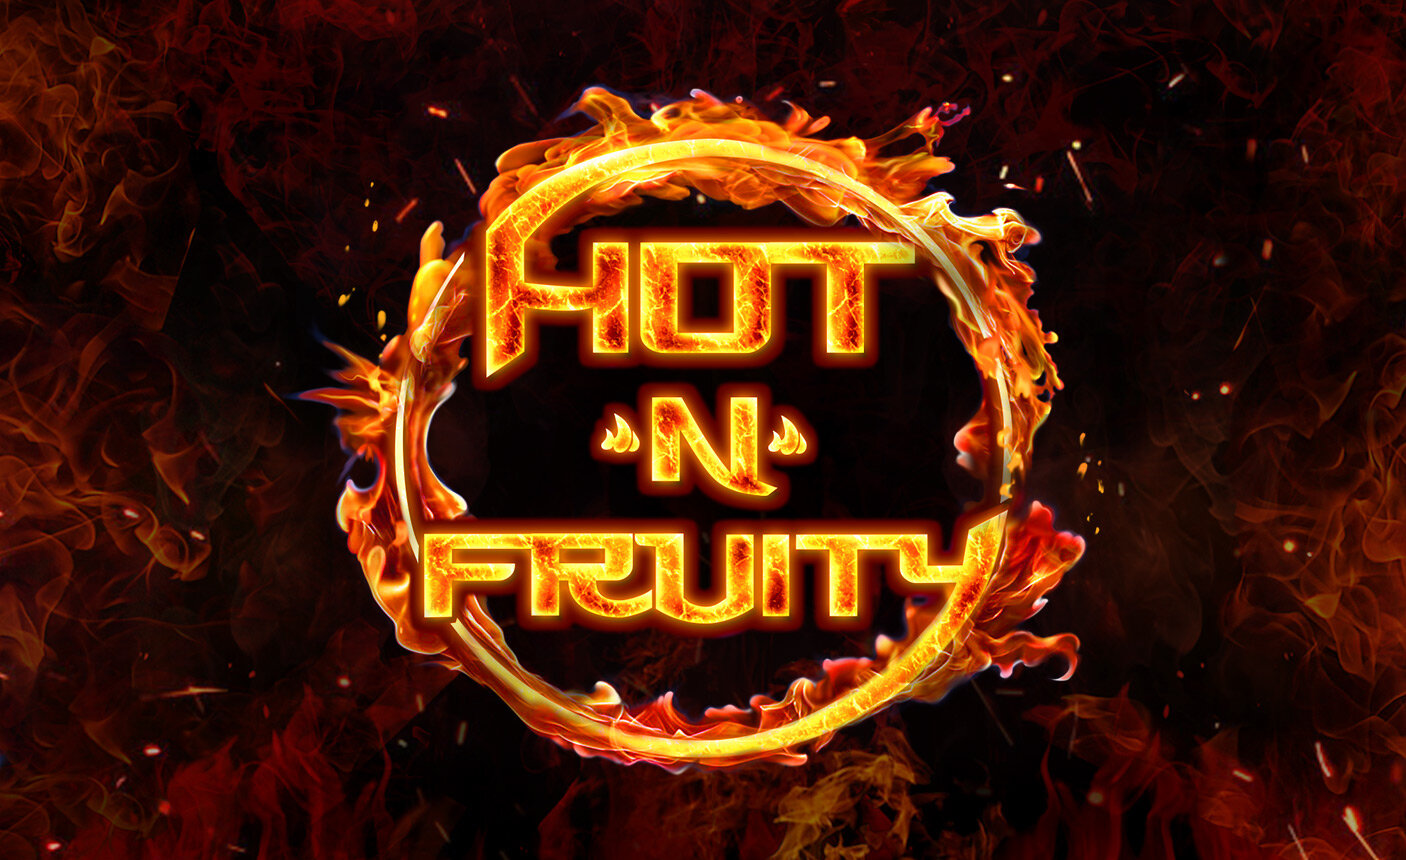 Hot'n'Fruity